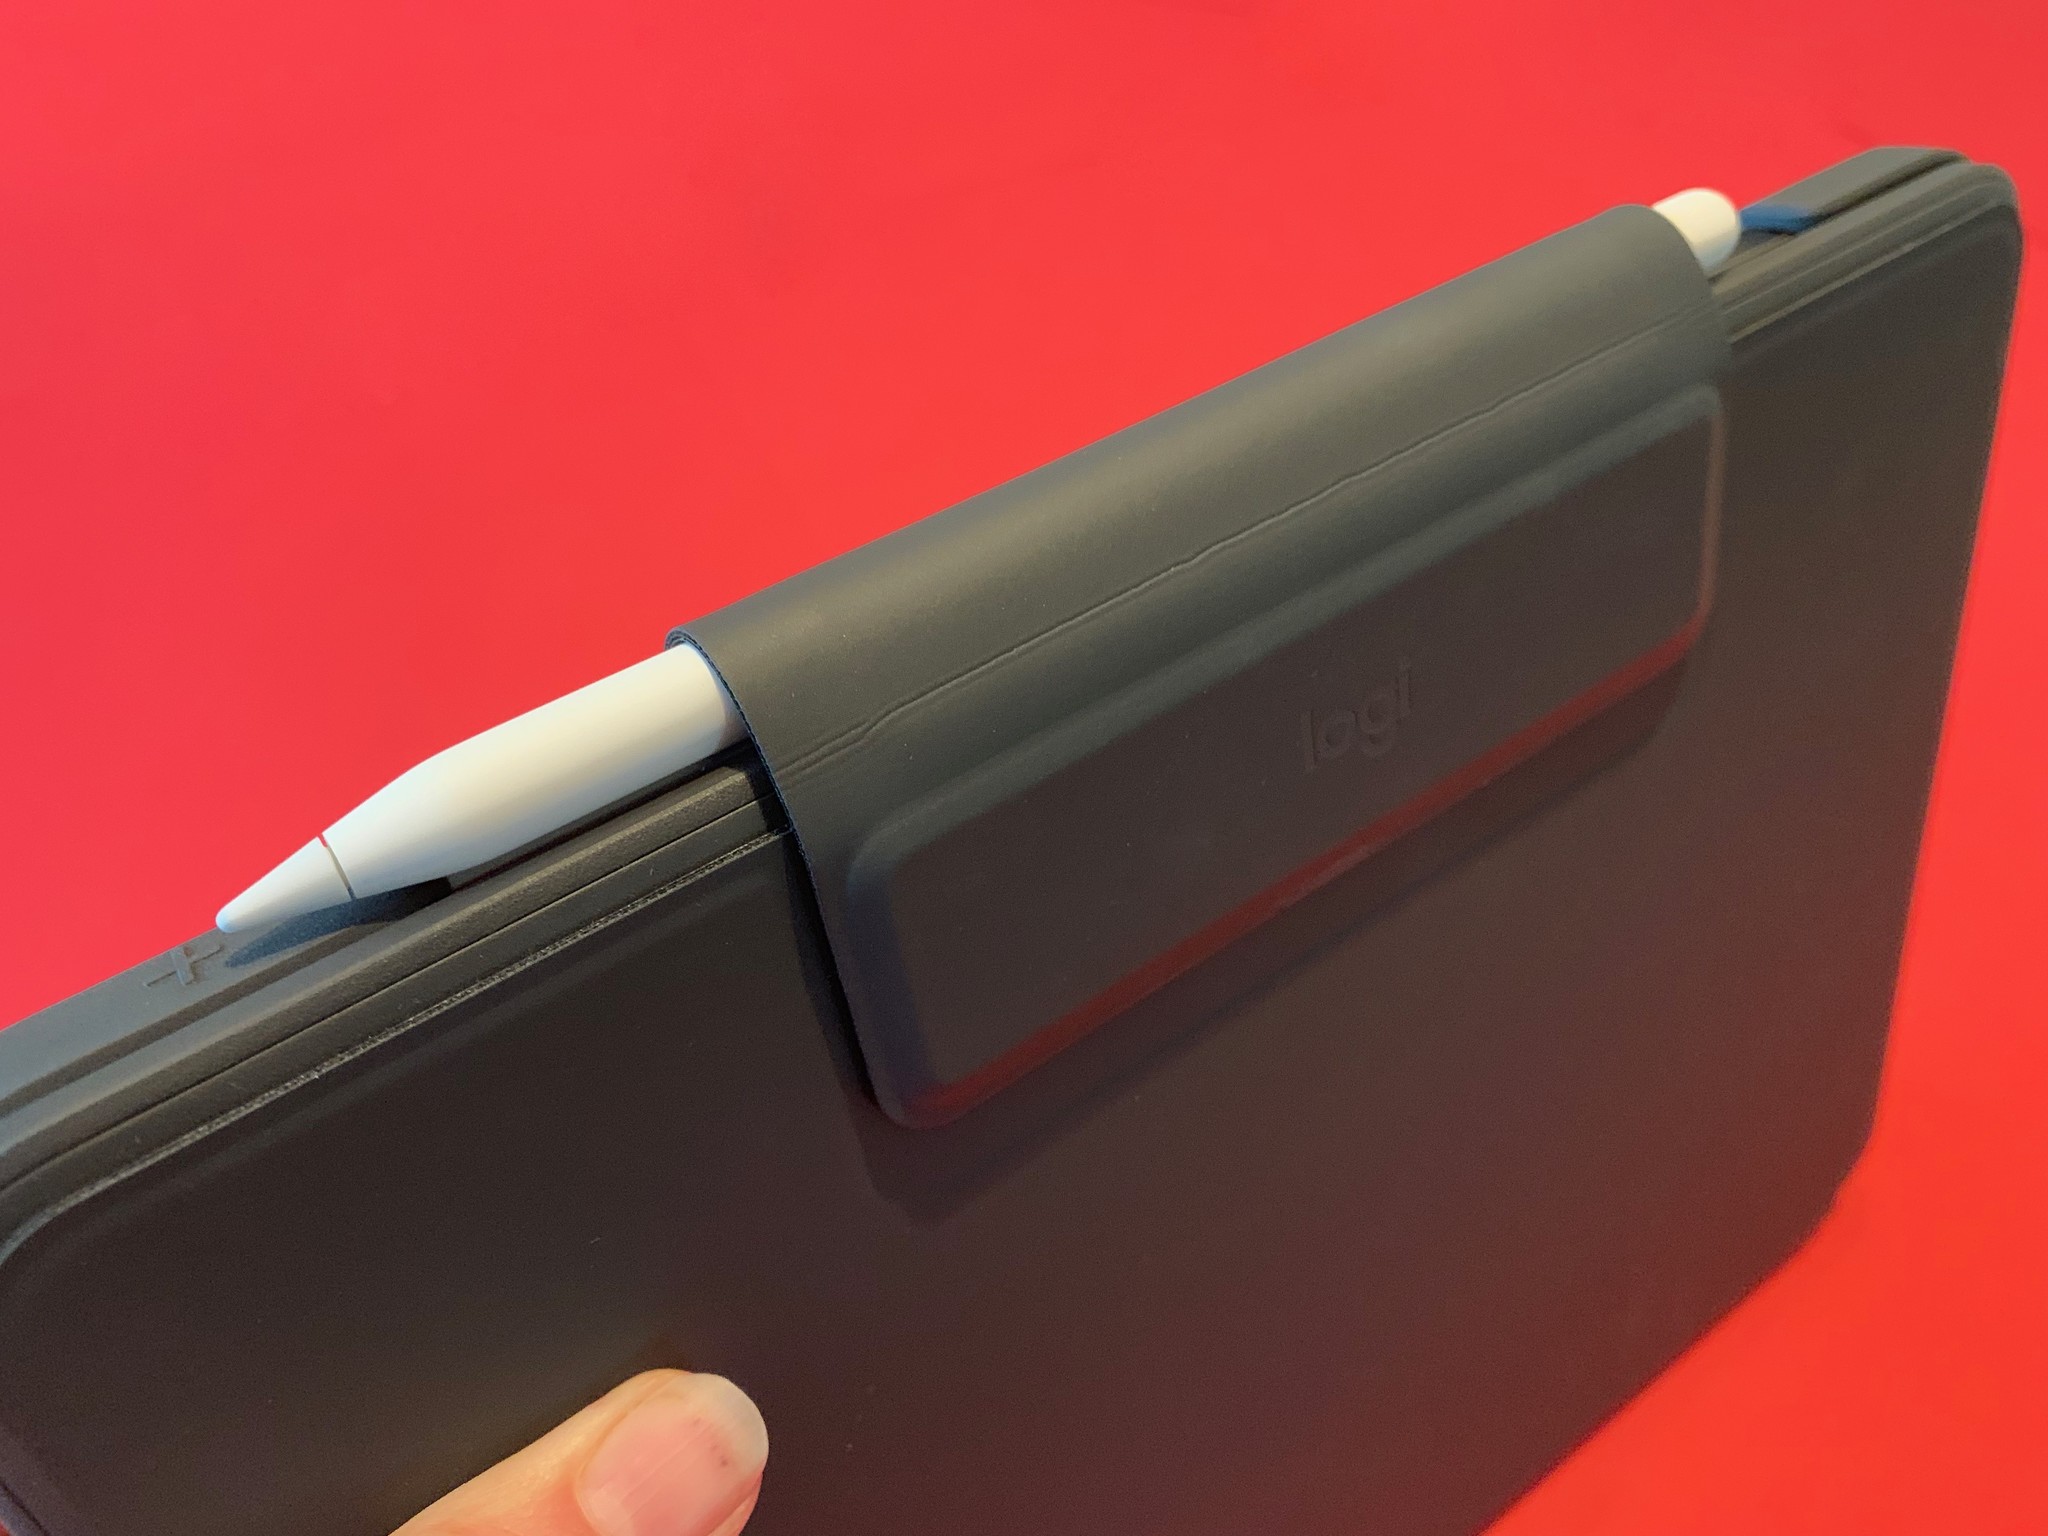 The Apple Pencil closure flap on the Logitech Folio Slim Pro